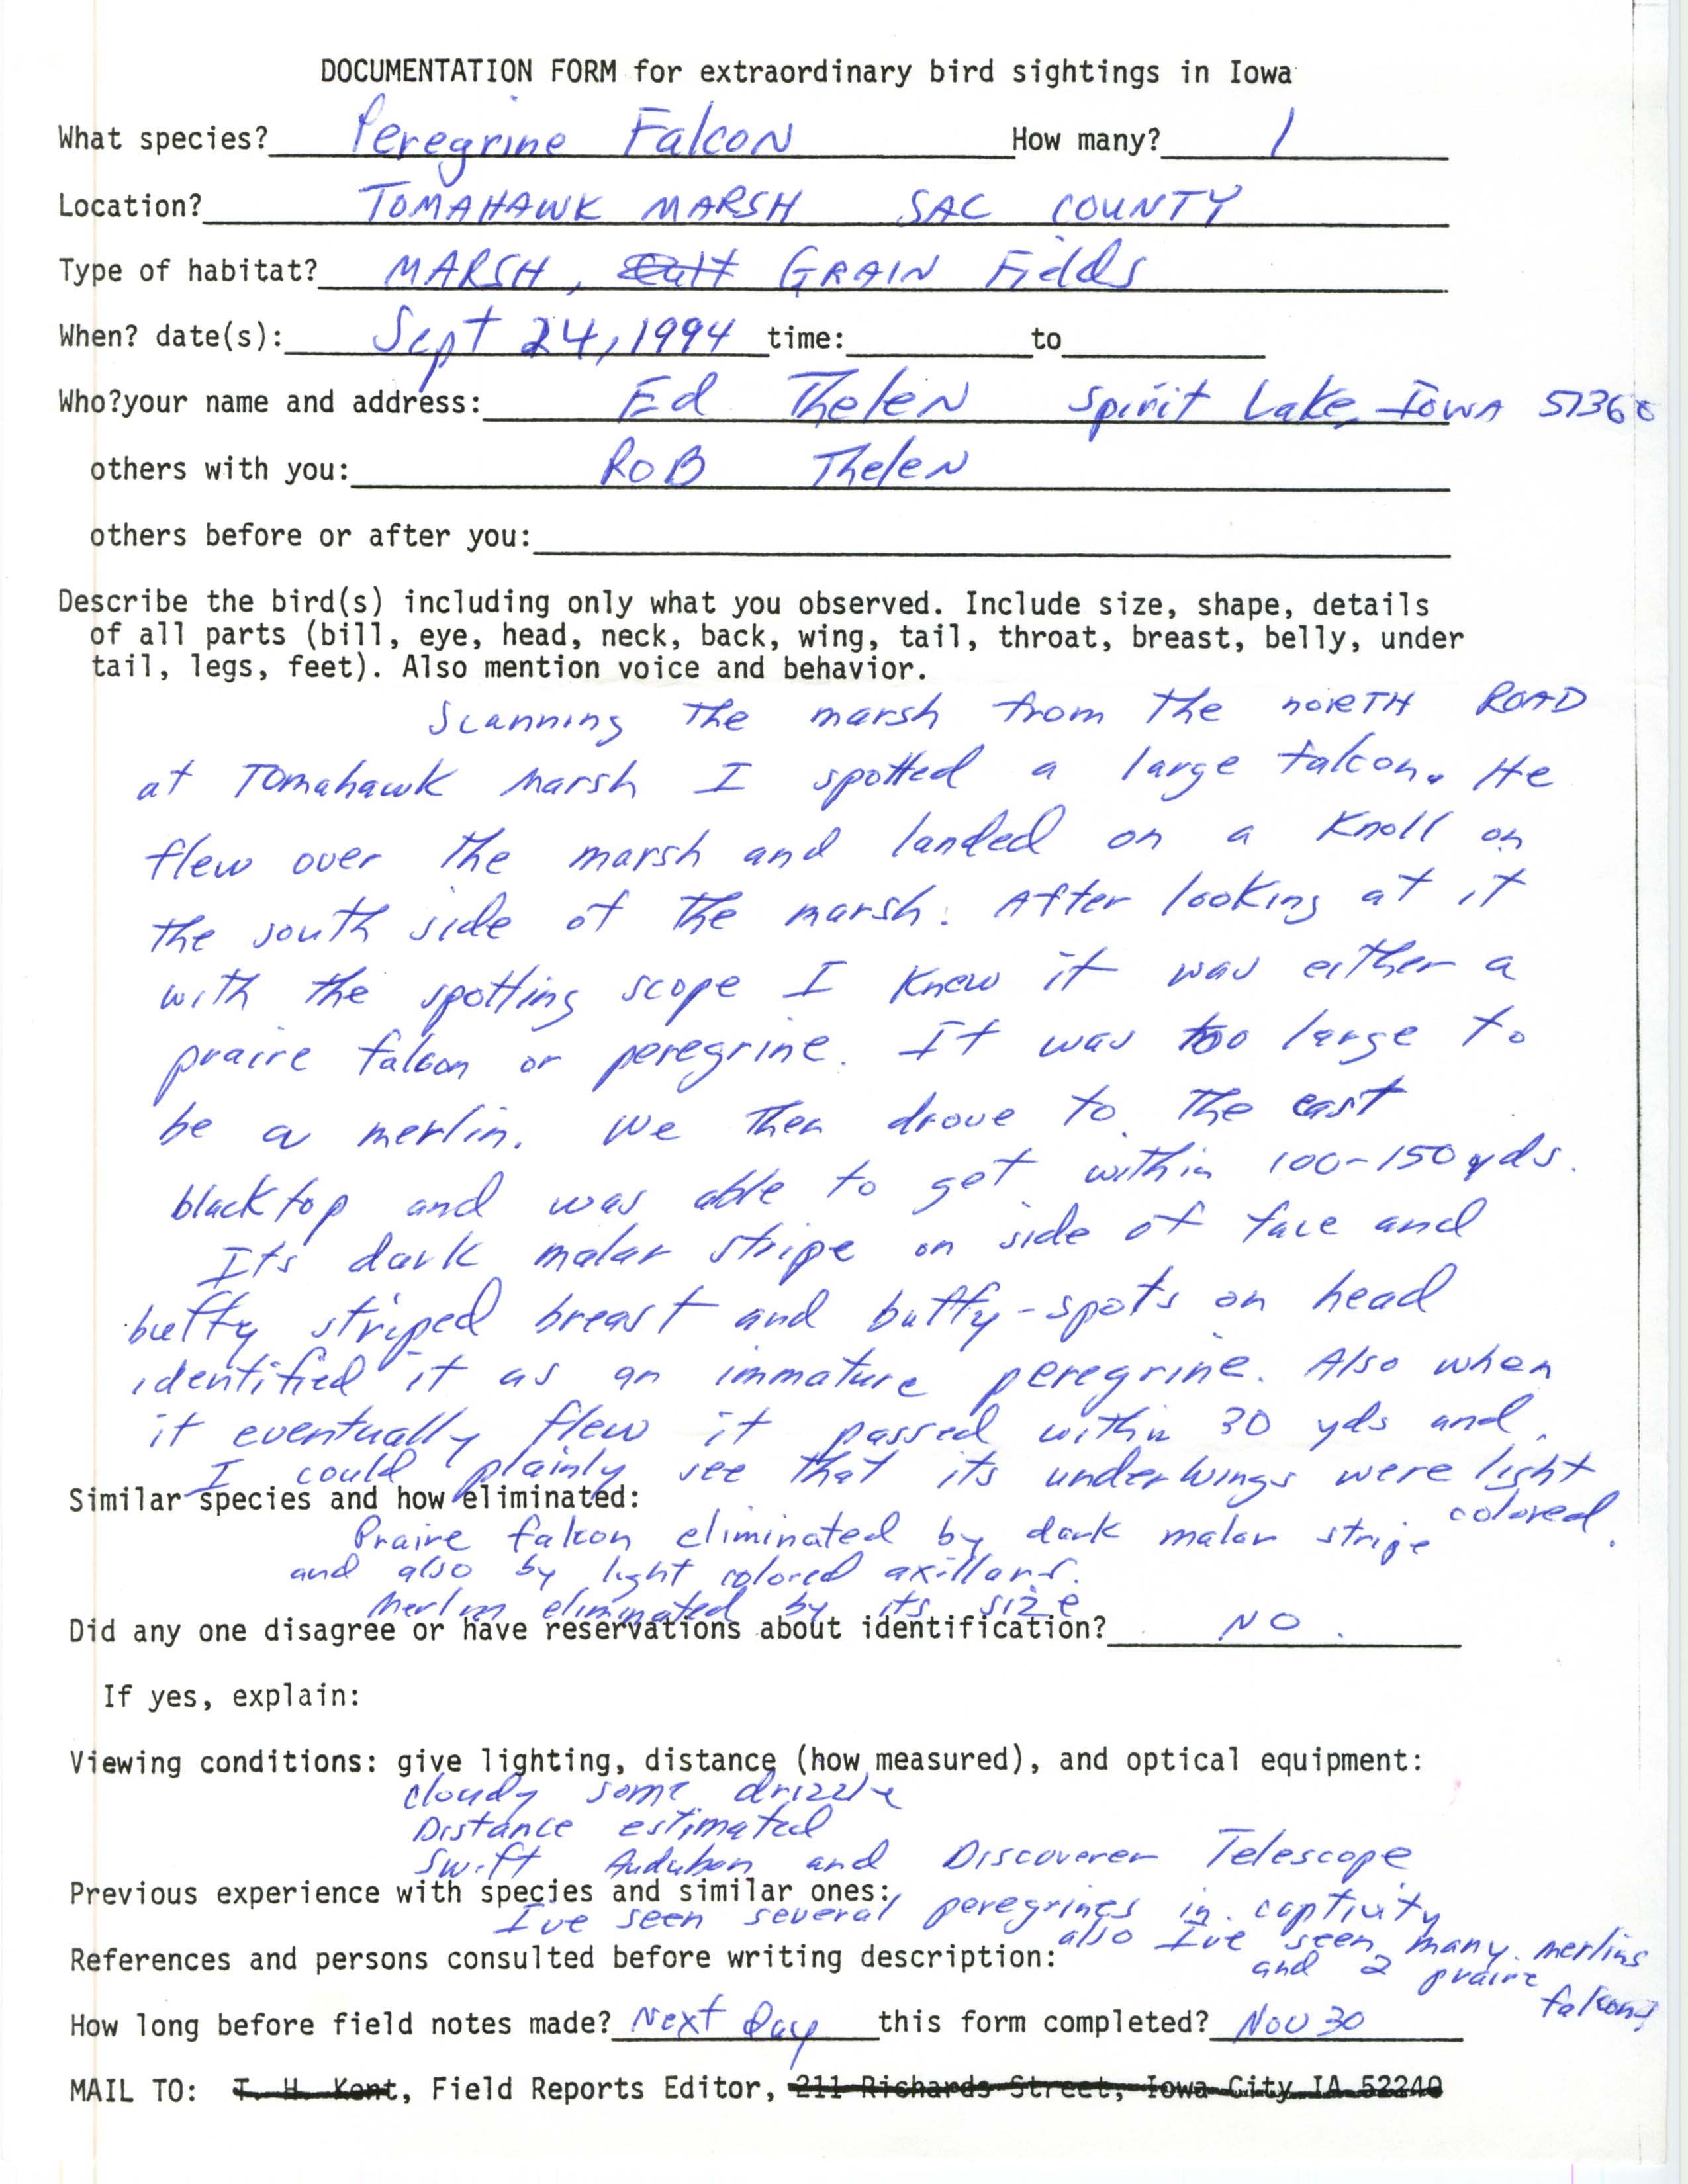 Rare bird documentation form for Peregrine Falcon at Tomahawk Marsh, 1994